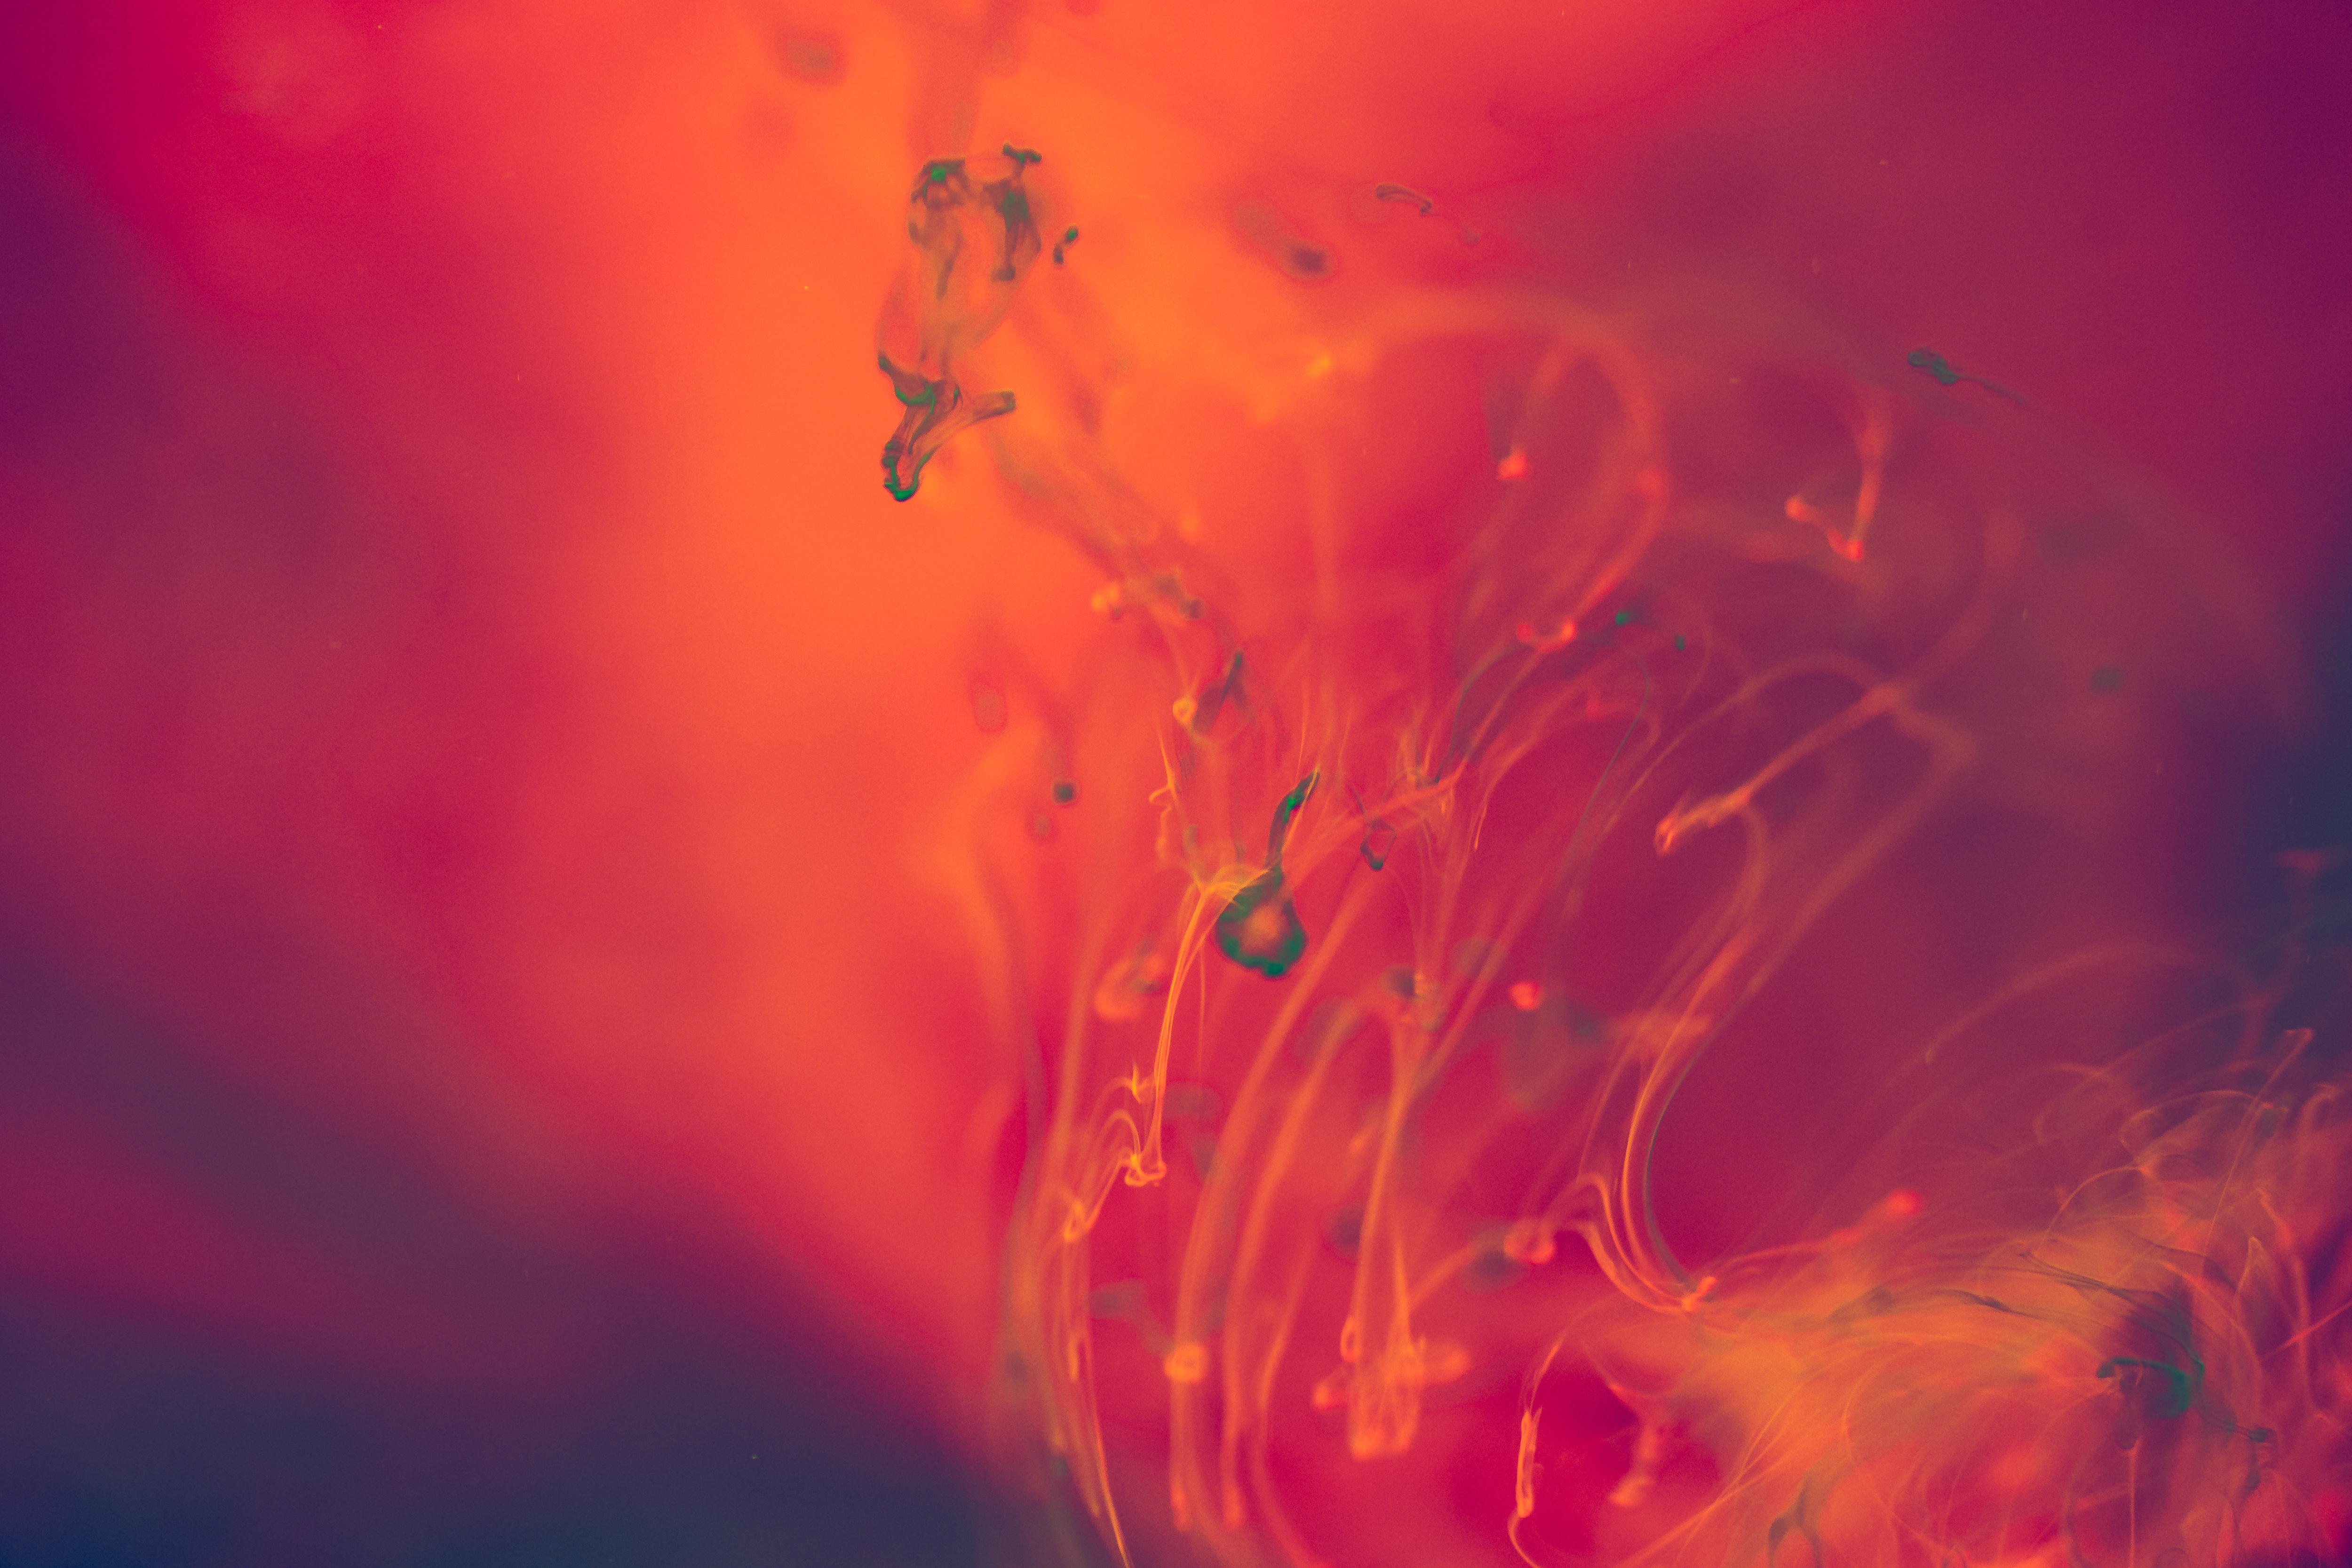 Abstract Red and Orange Liquid Background Free Stock Photo | picjumbo